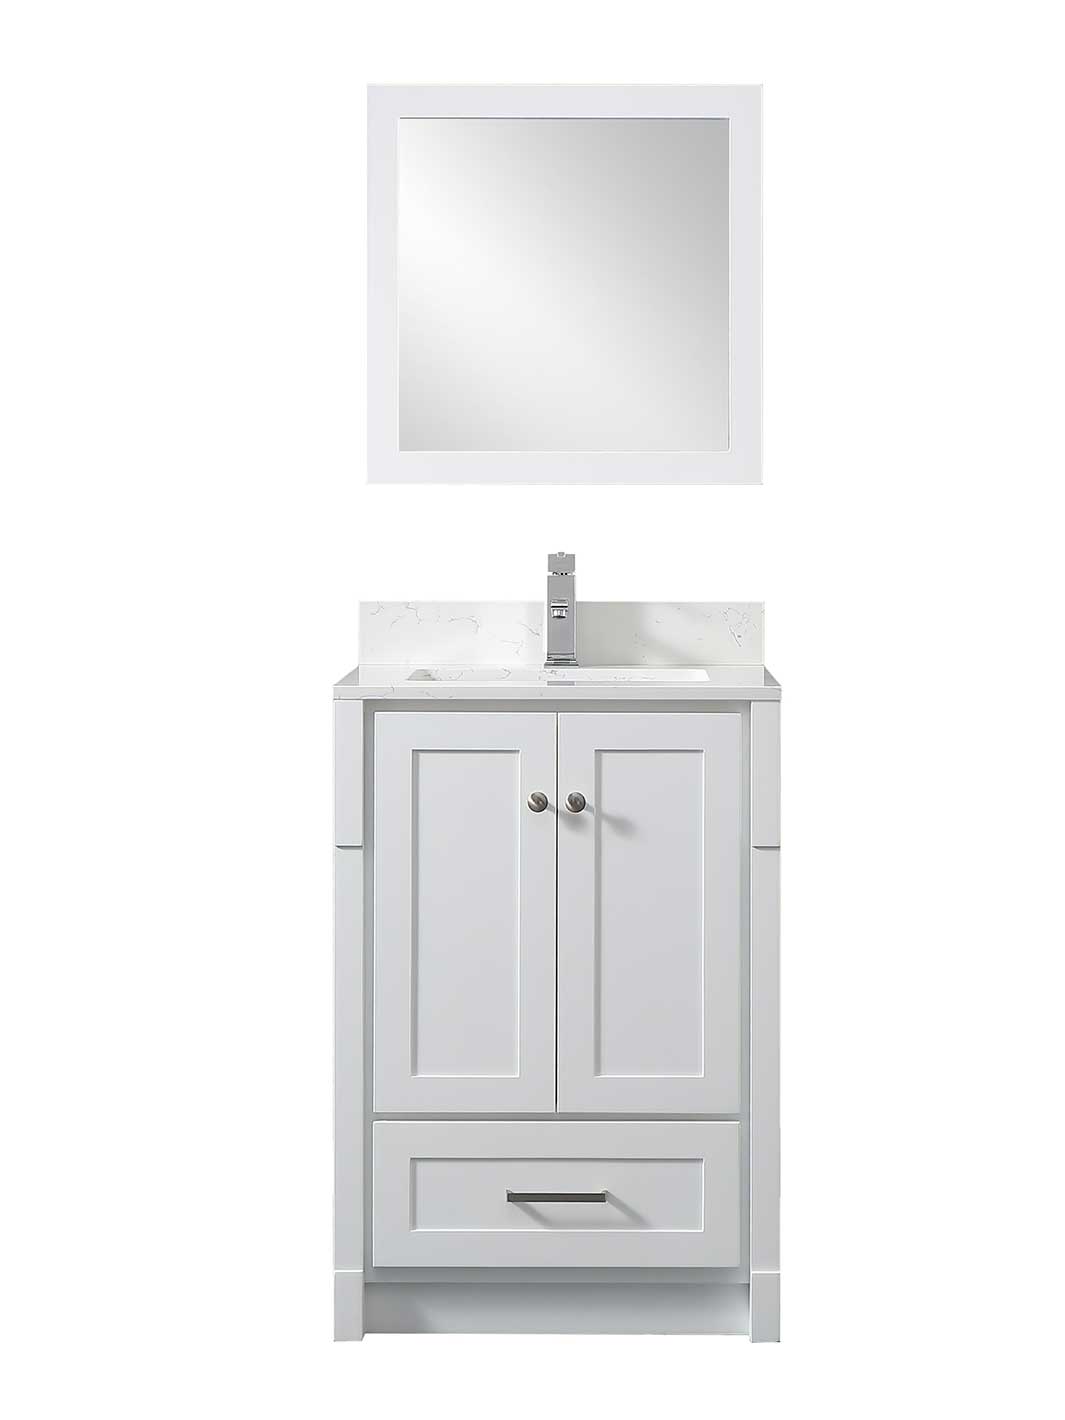 white vanity with kickboard, white framed mirror, white quartz counter, and chrome faucet